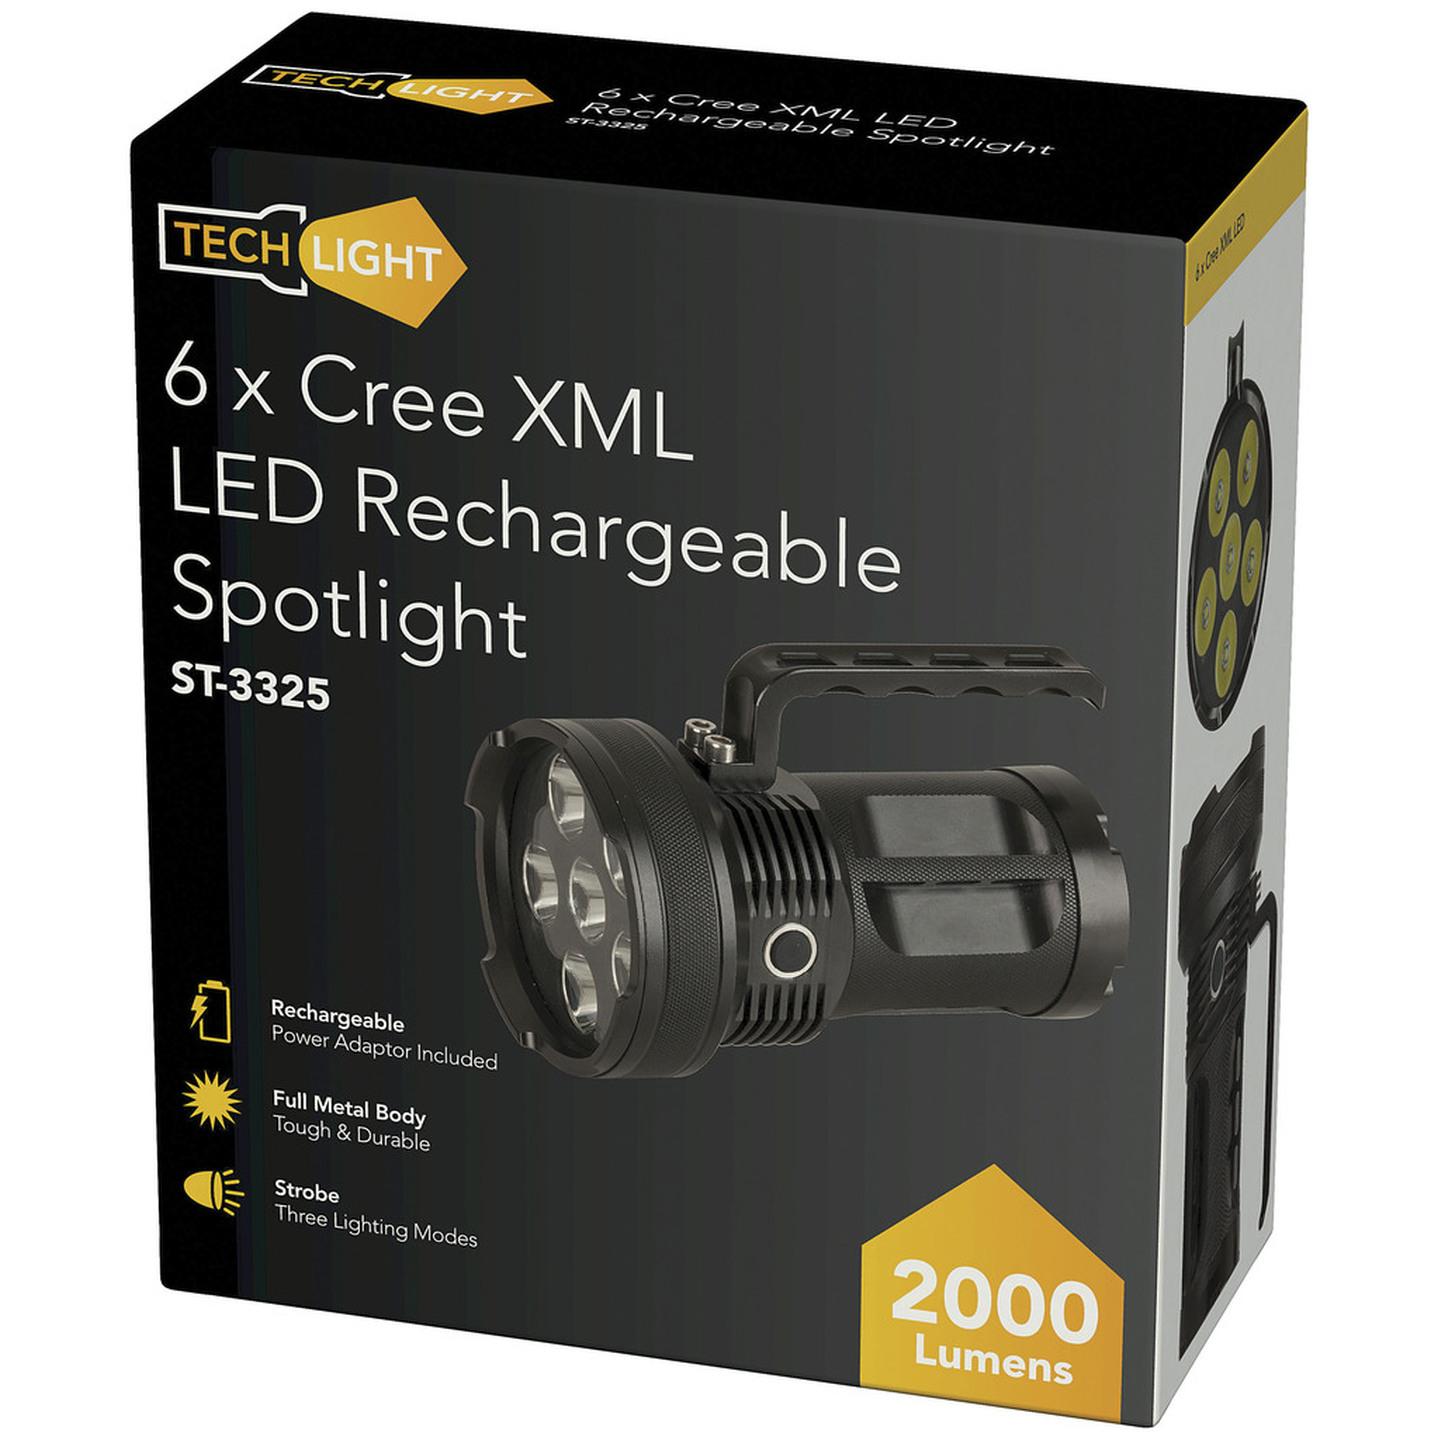 Rechargeable 6 x Cree XML LED Spotlight